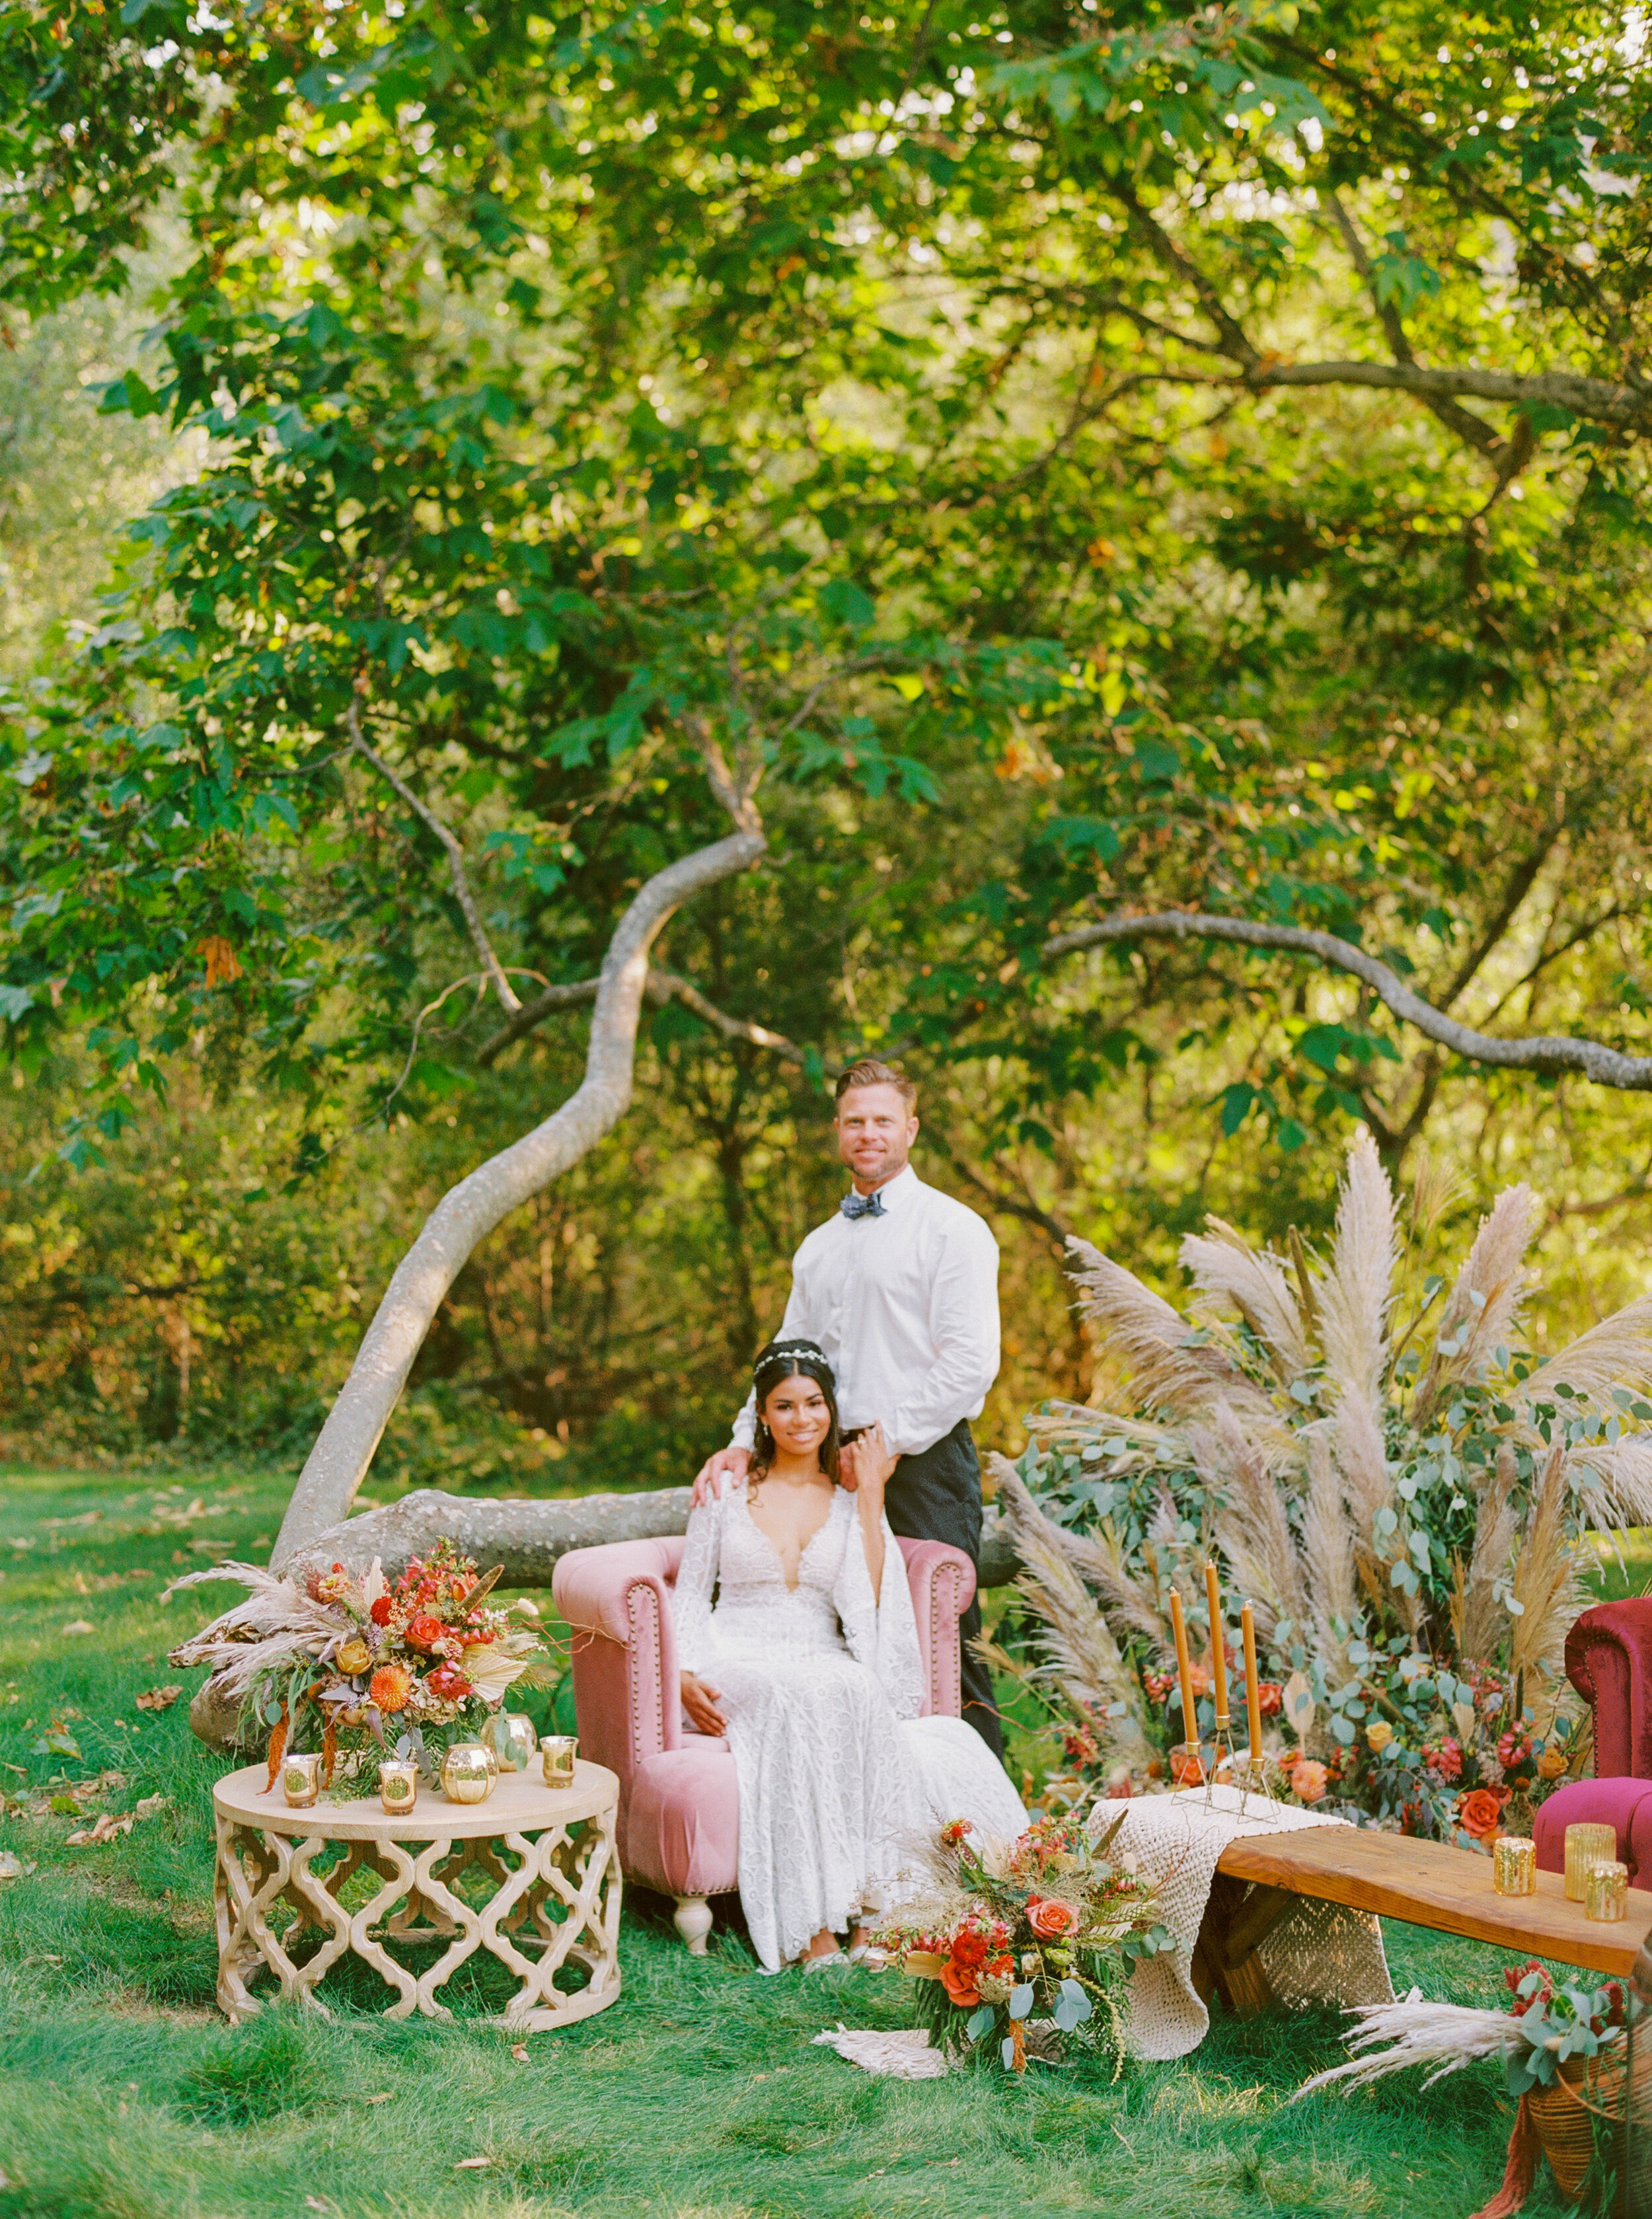 Sarahi Hadden - An Earthy Summer Boho Inspired Wedding with Sunset Hues at Gardener Ranch-61.jpg